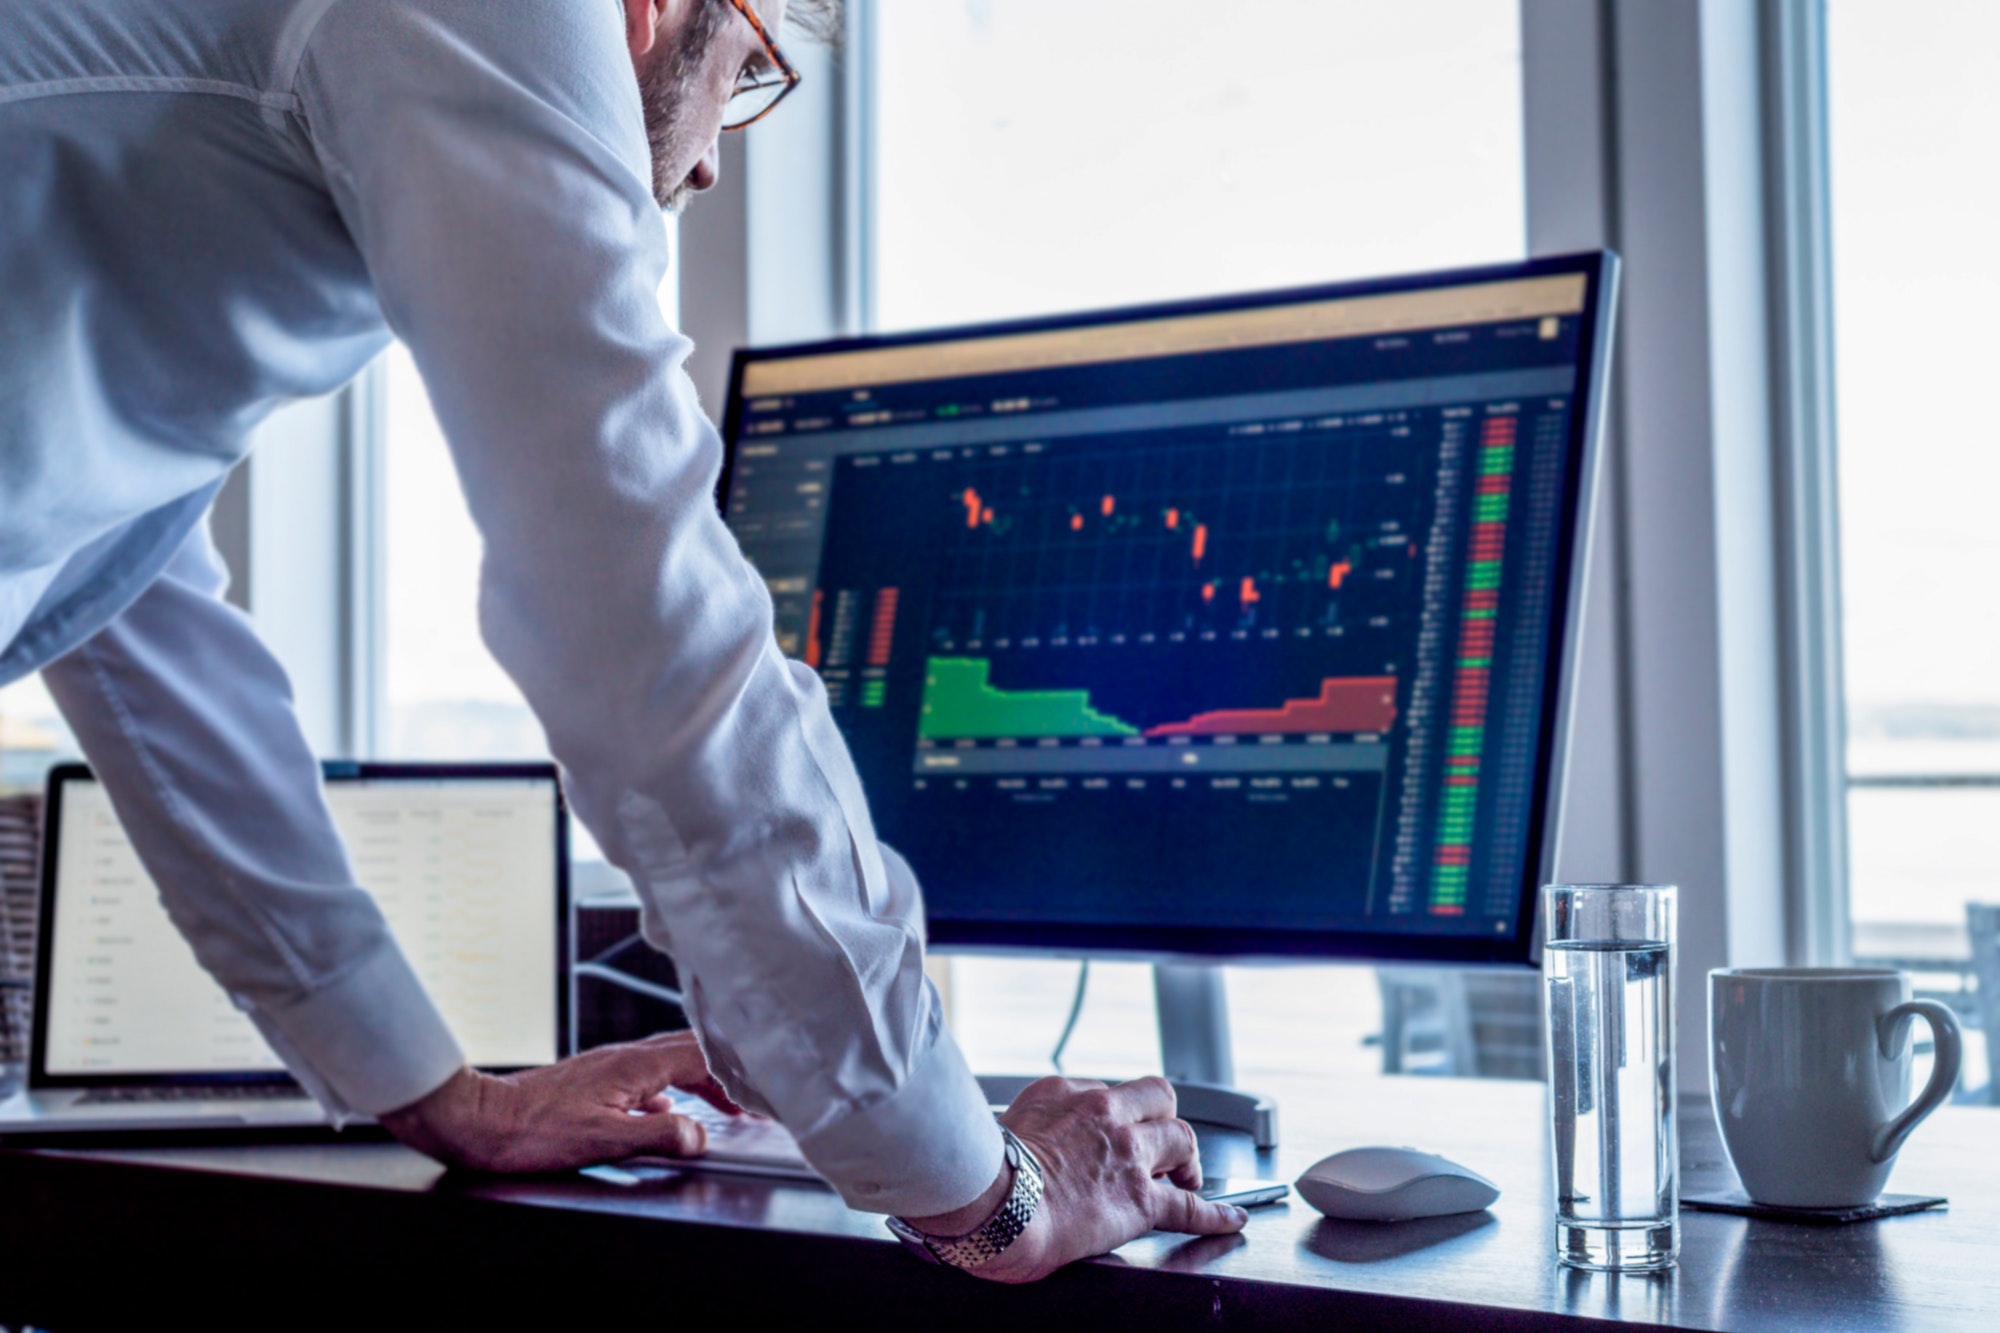 Man at desk looking at computer screen showing stock market trading data.